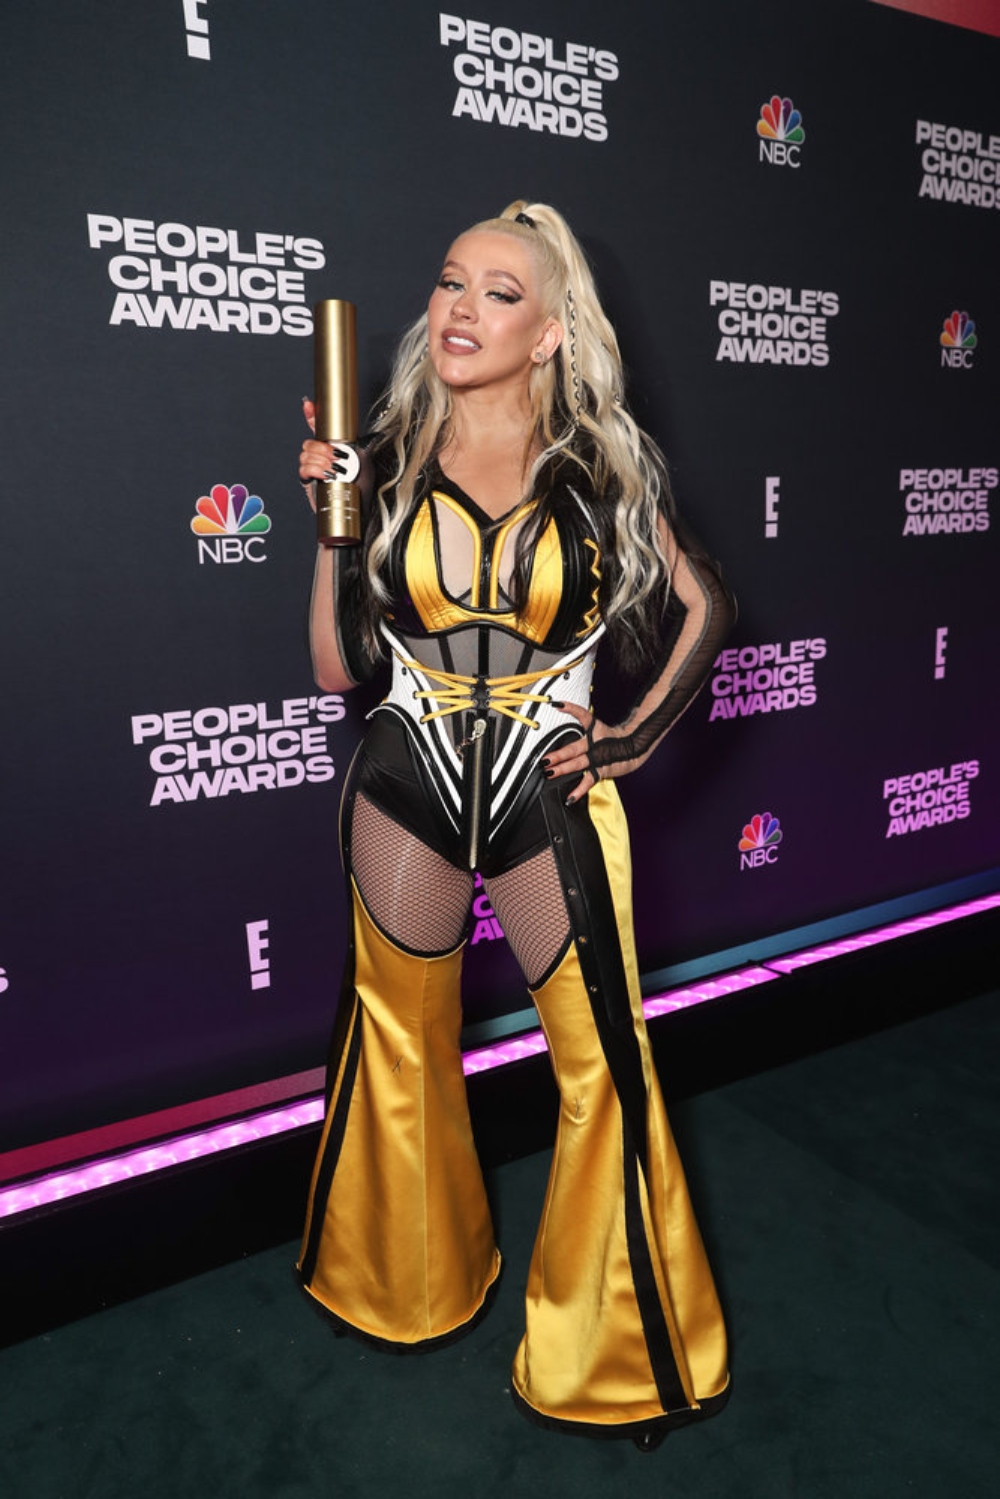 2021 PEOPLES CHOICE AWARDS Pictured Christina Aguilera Photo by Todd Williamson E Entertainment NBC Ovo je lista pobednika dodele nagrada 2021 PEOPLES CHOICE AWARDS